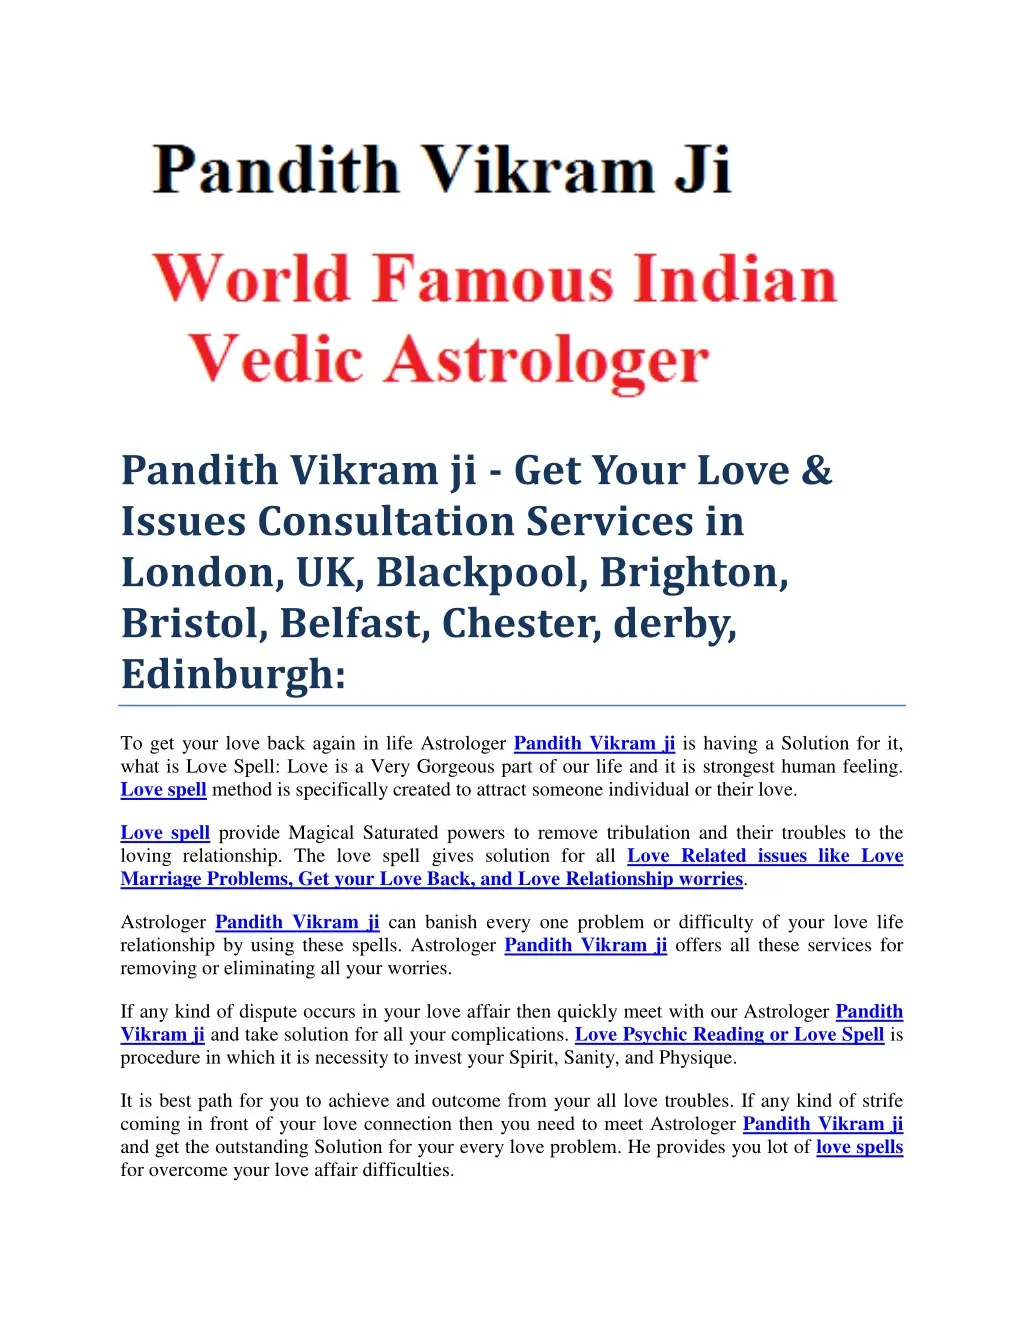 pandith vikram ji get your love issues